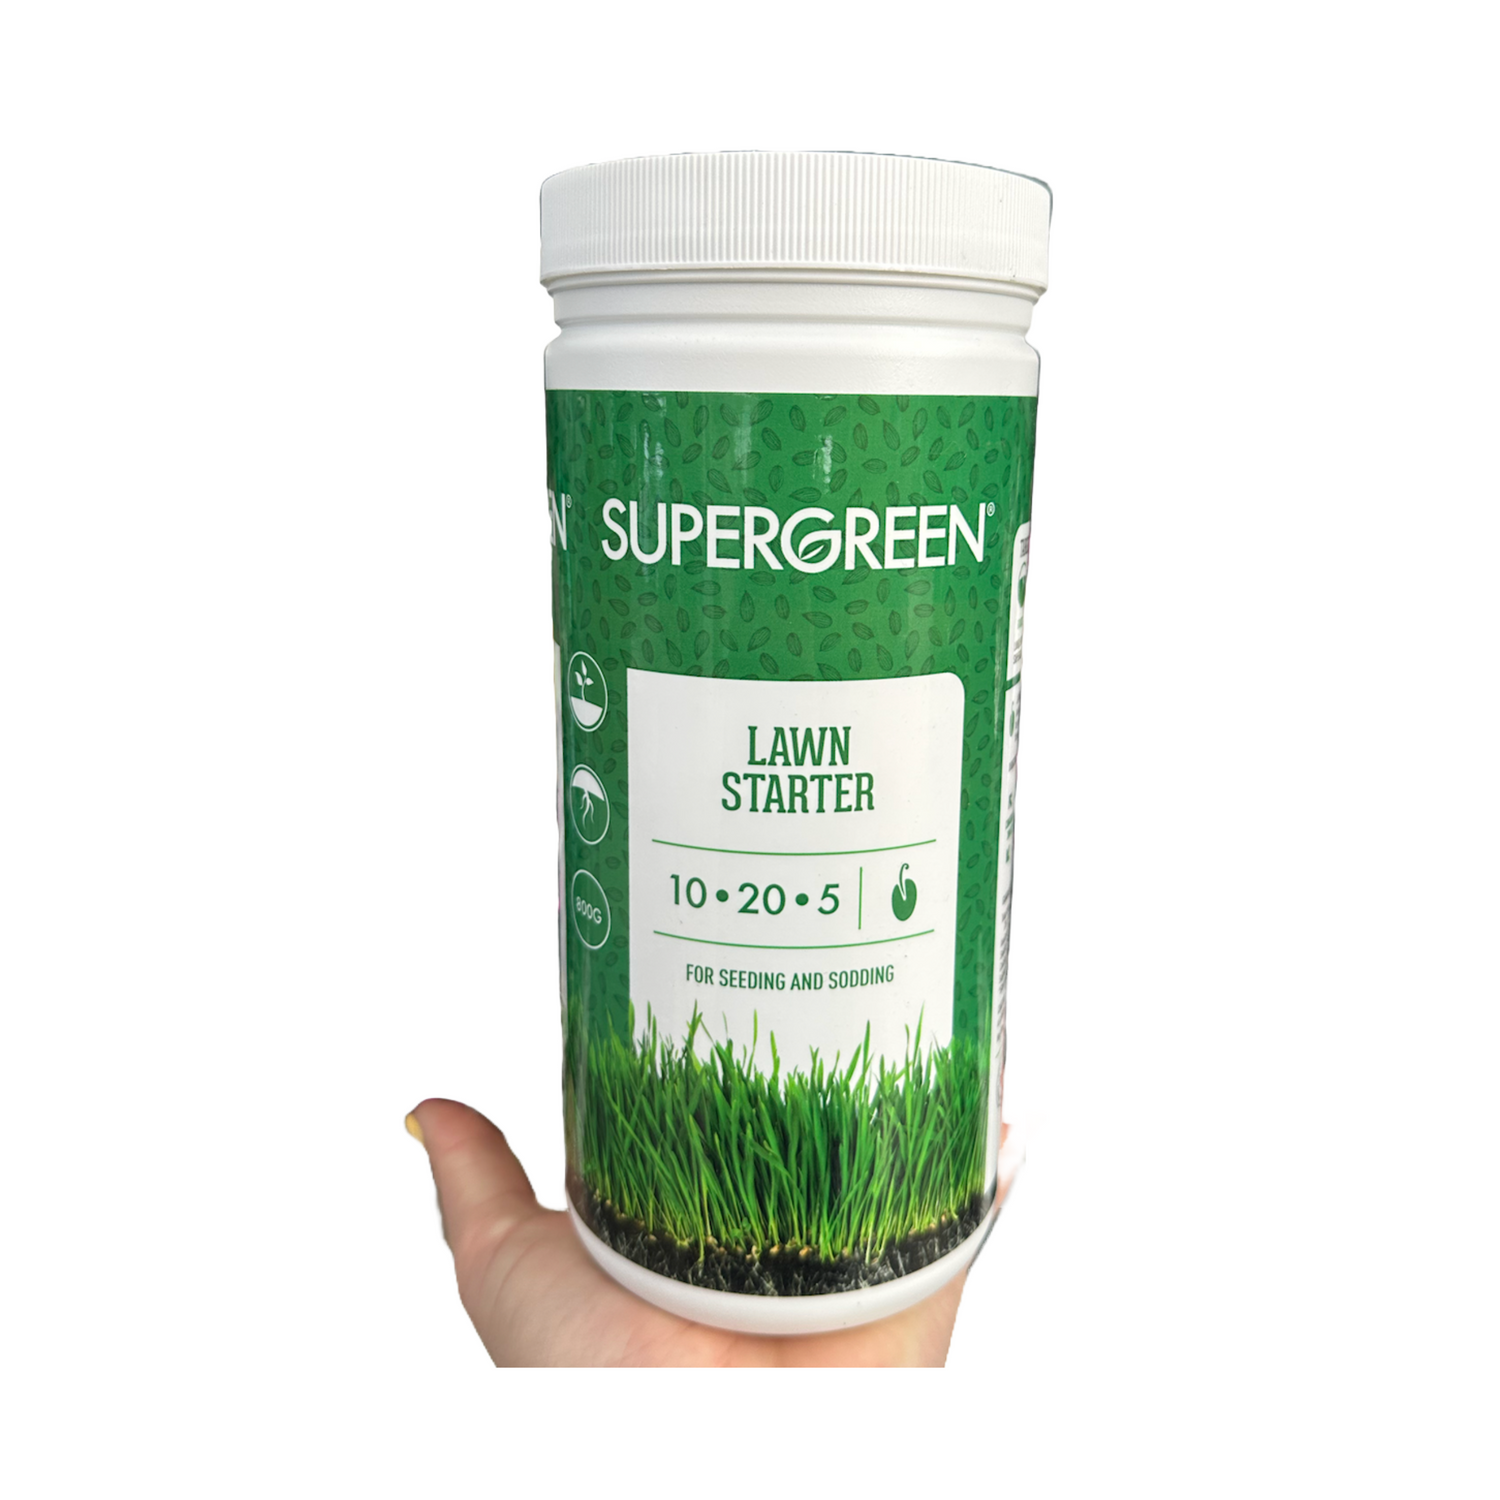 Supergreen Lawn Starter